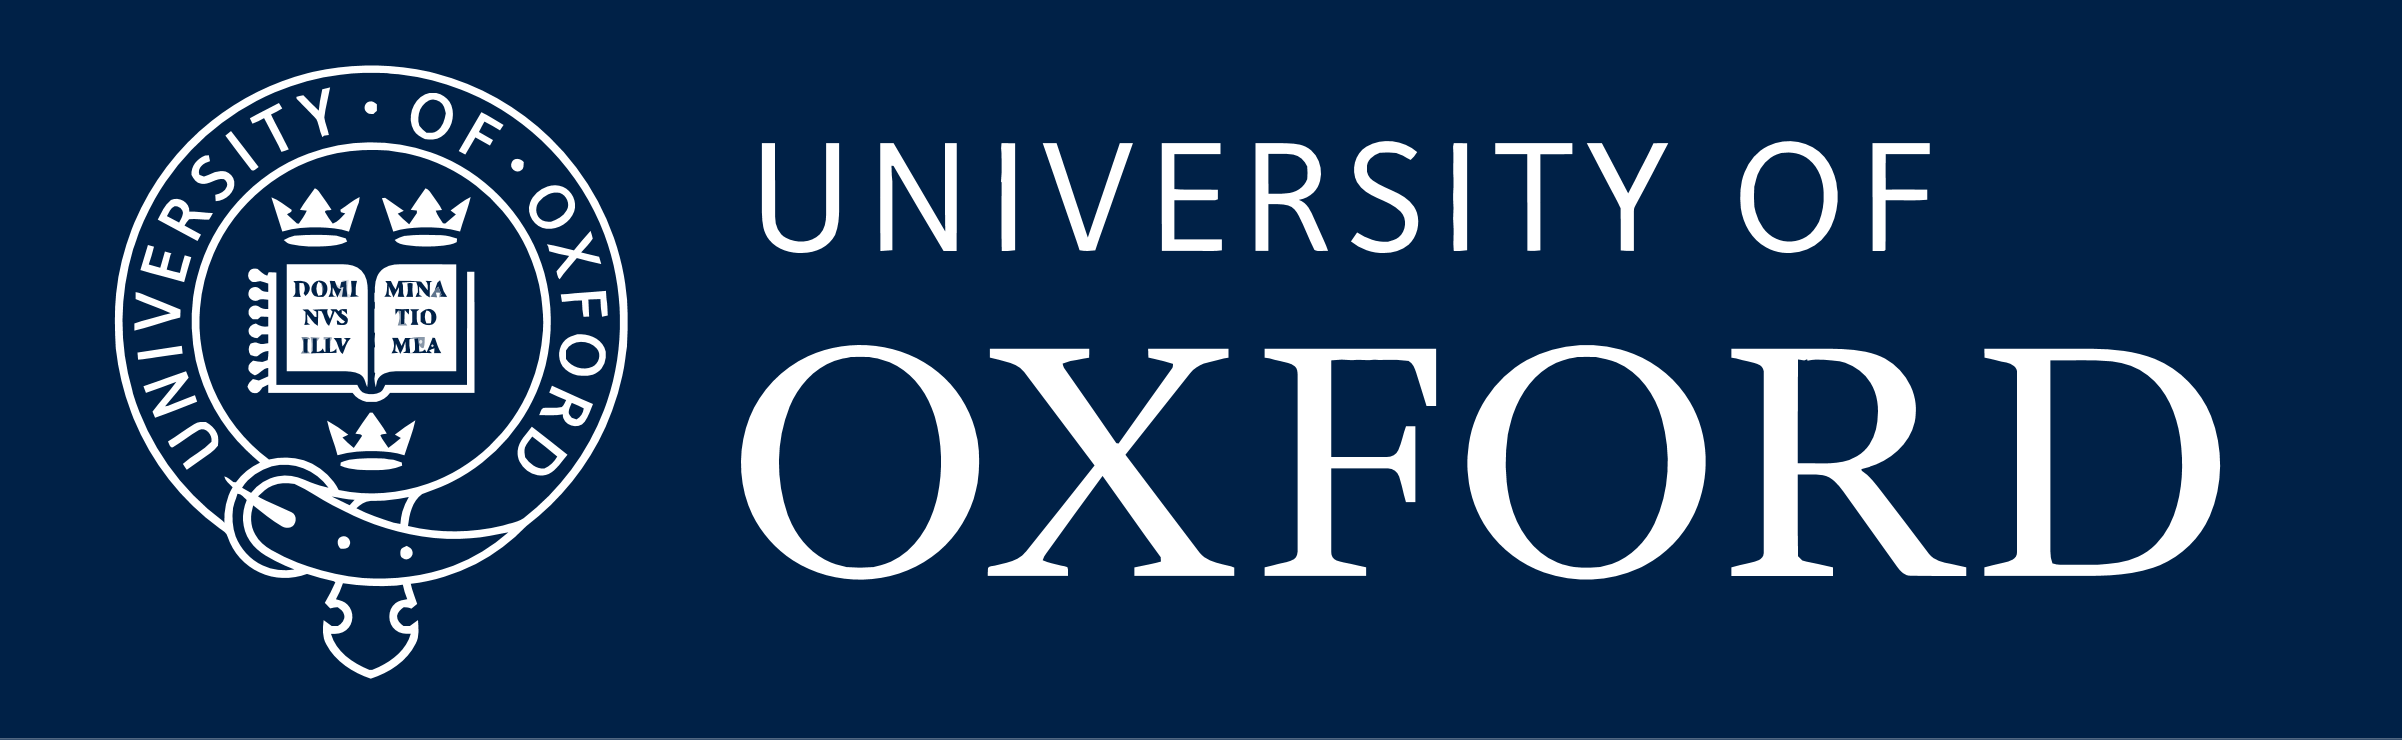 20140411074945!University_of_Oxford